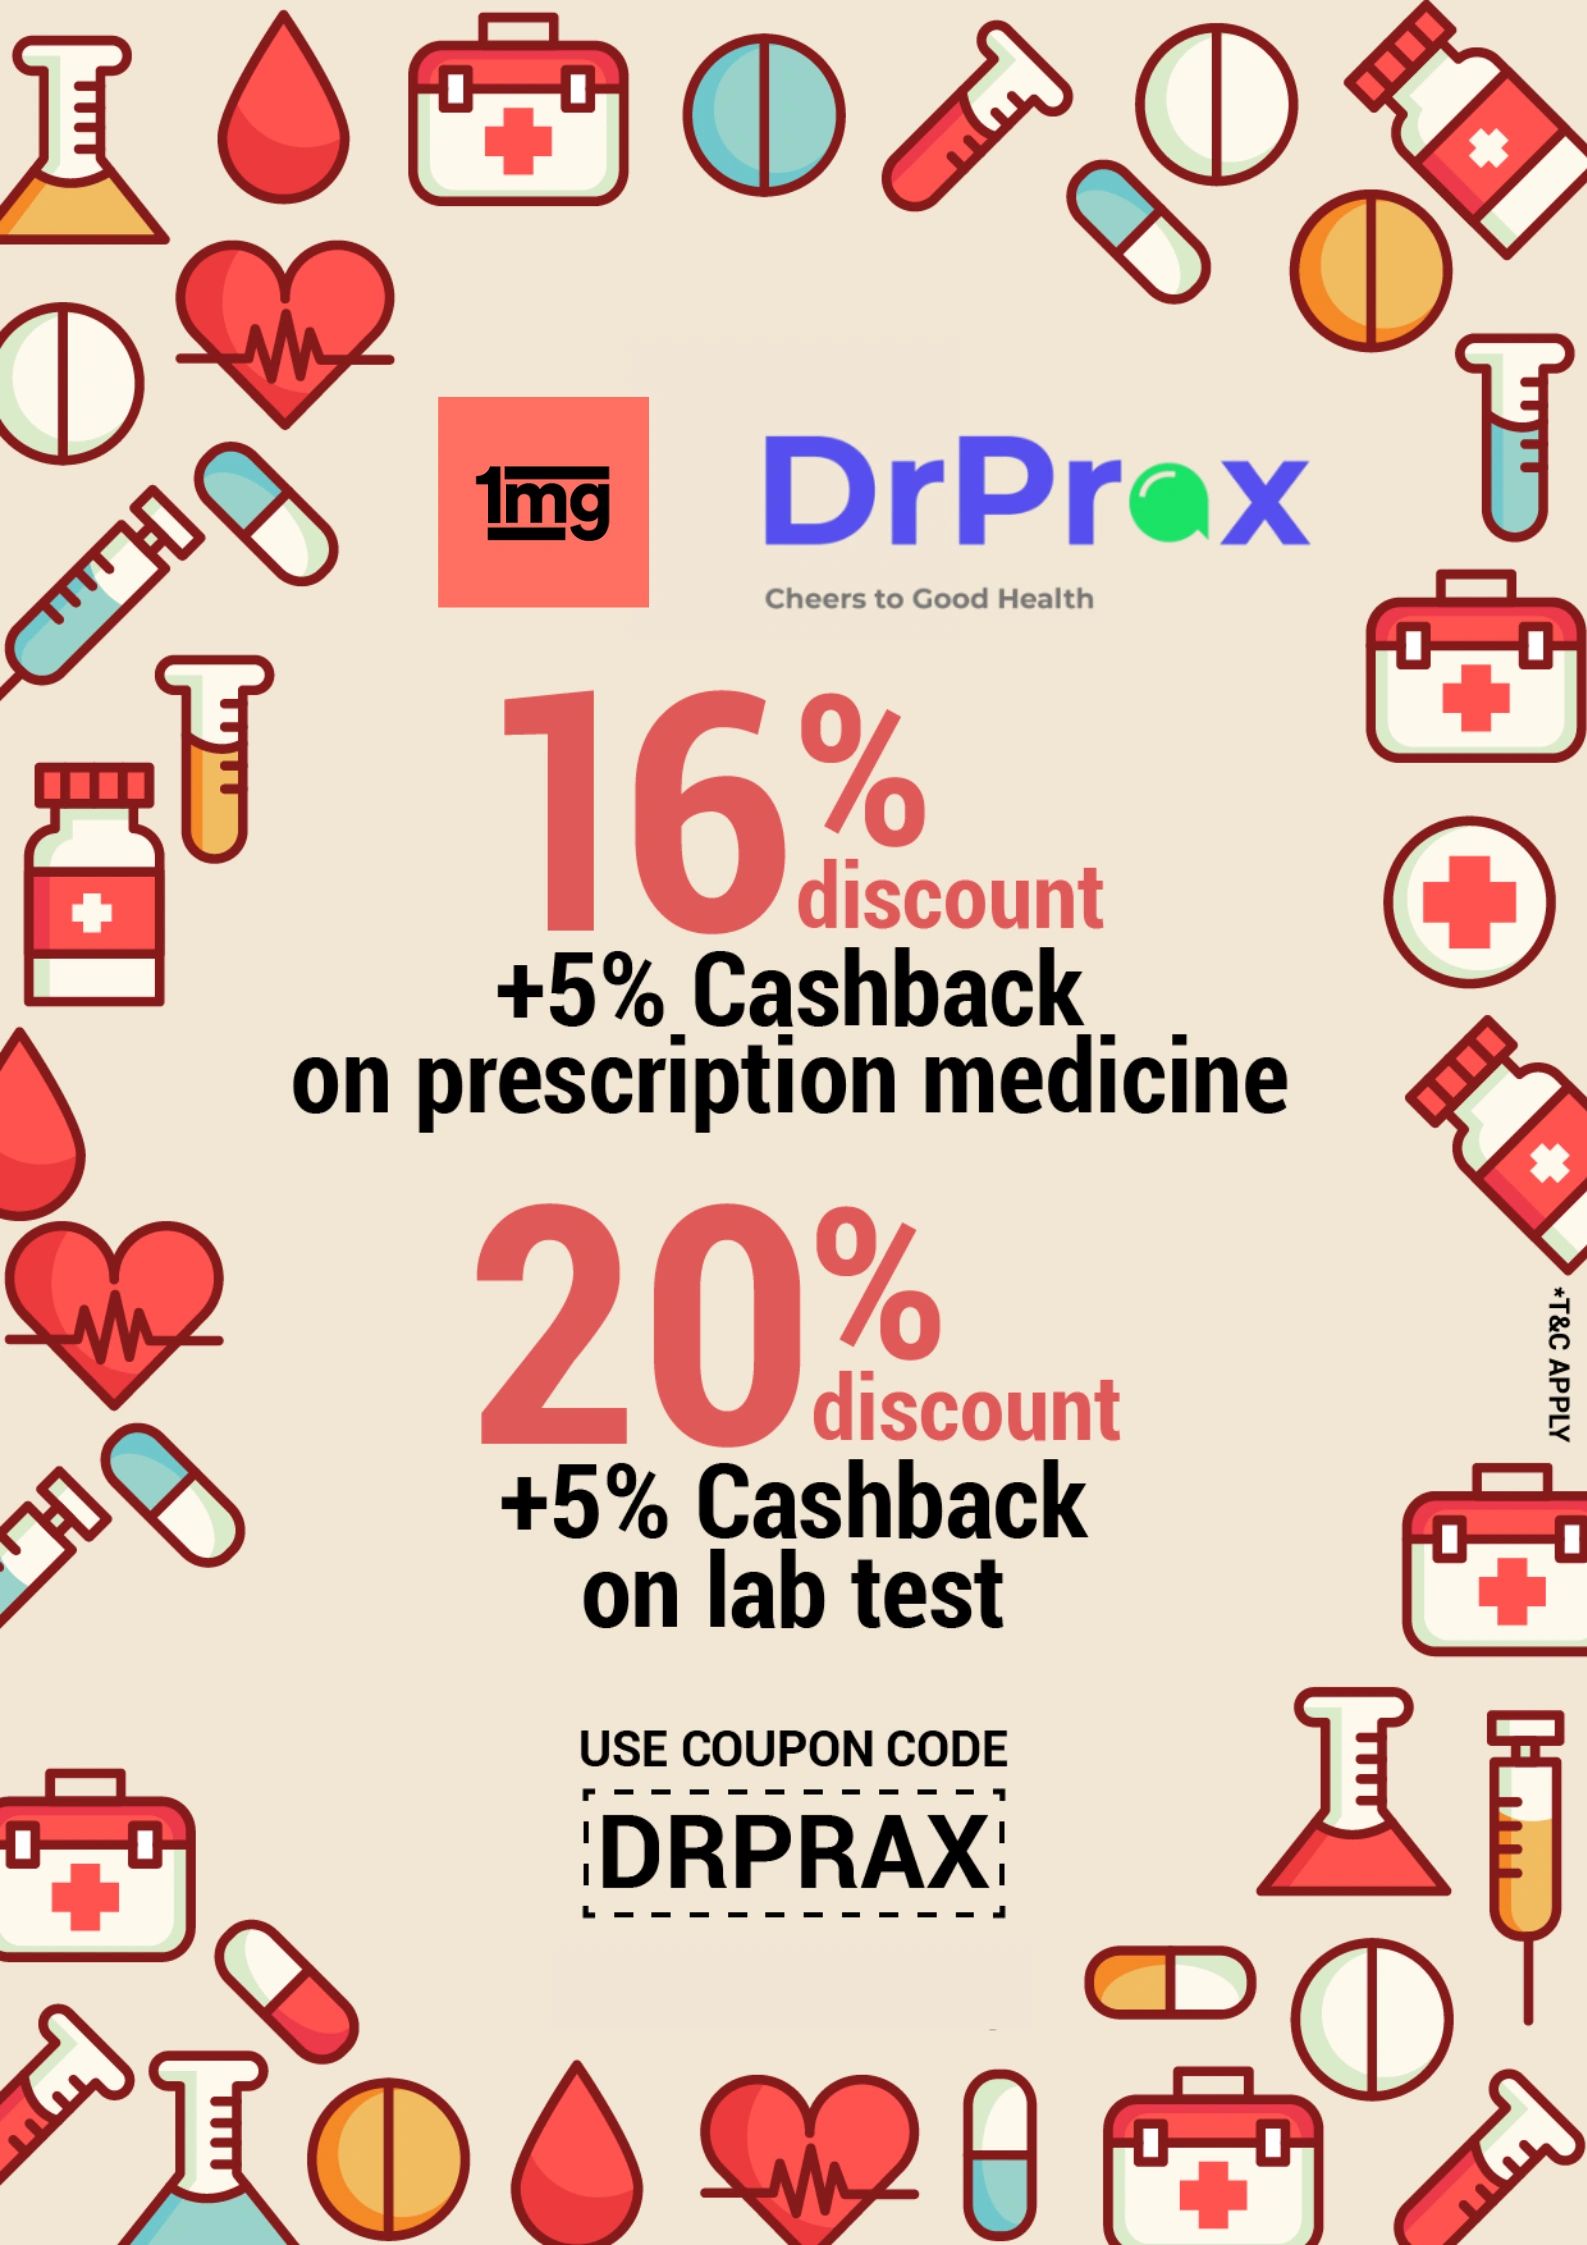 1mg DrPrax partner medicine diagnostics lab tests